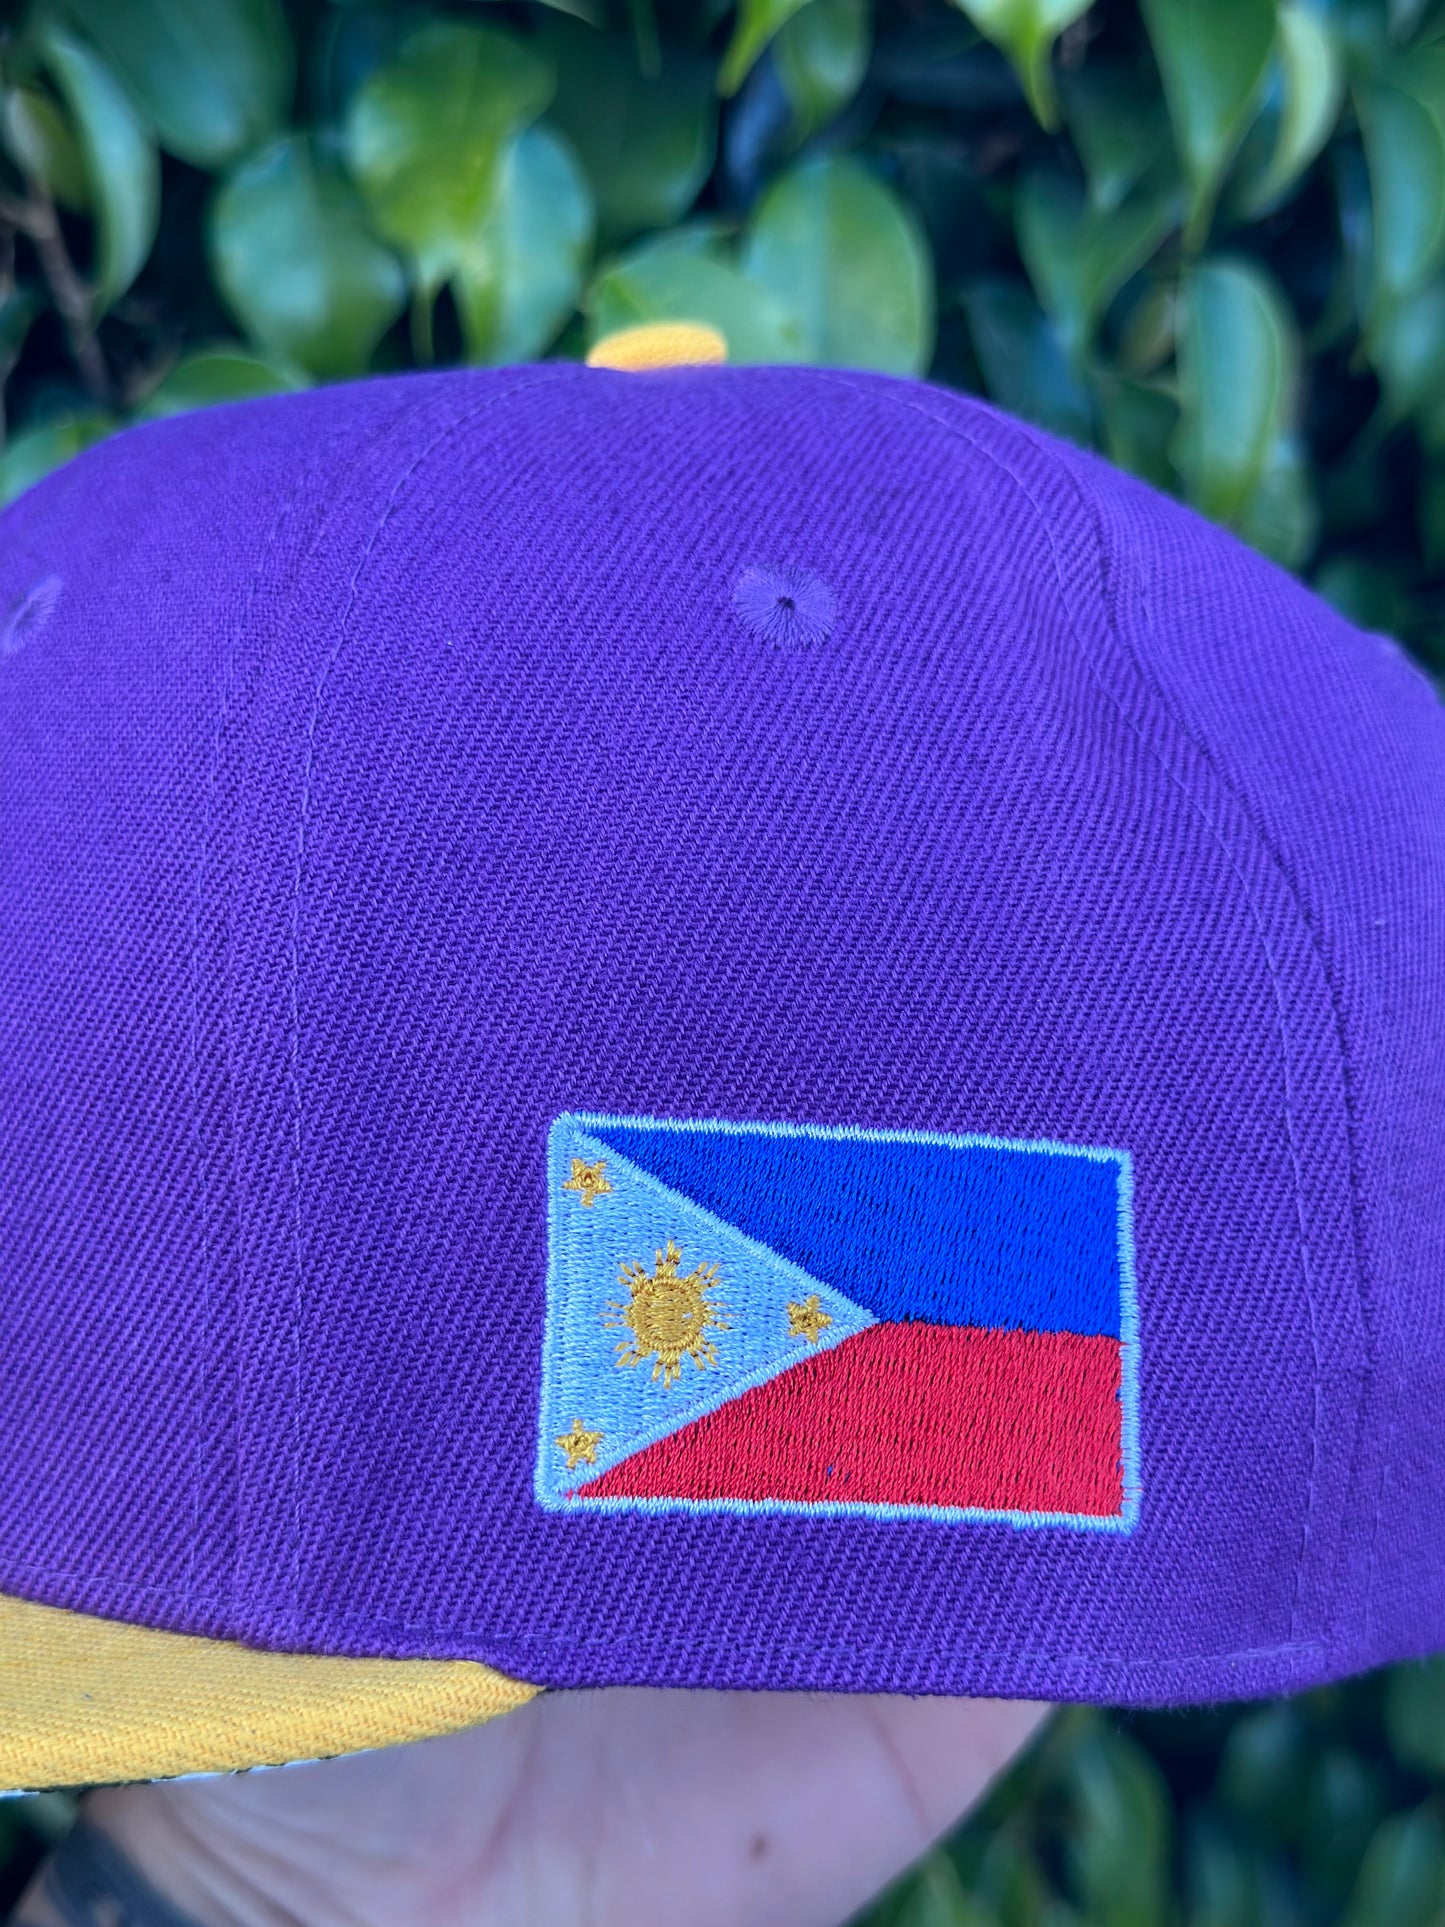 “LA LAKERS” Purple Filipino Heritage Night Philippines Snap Back Hat